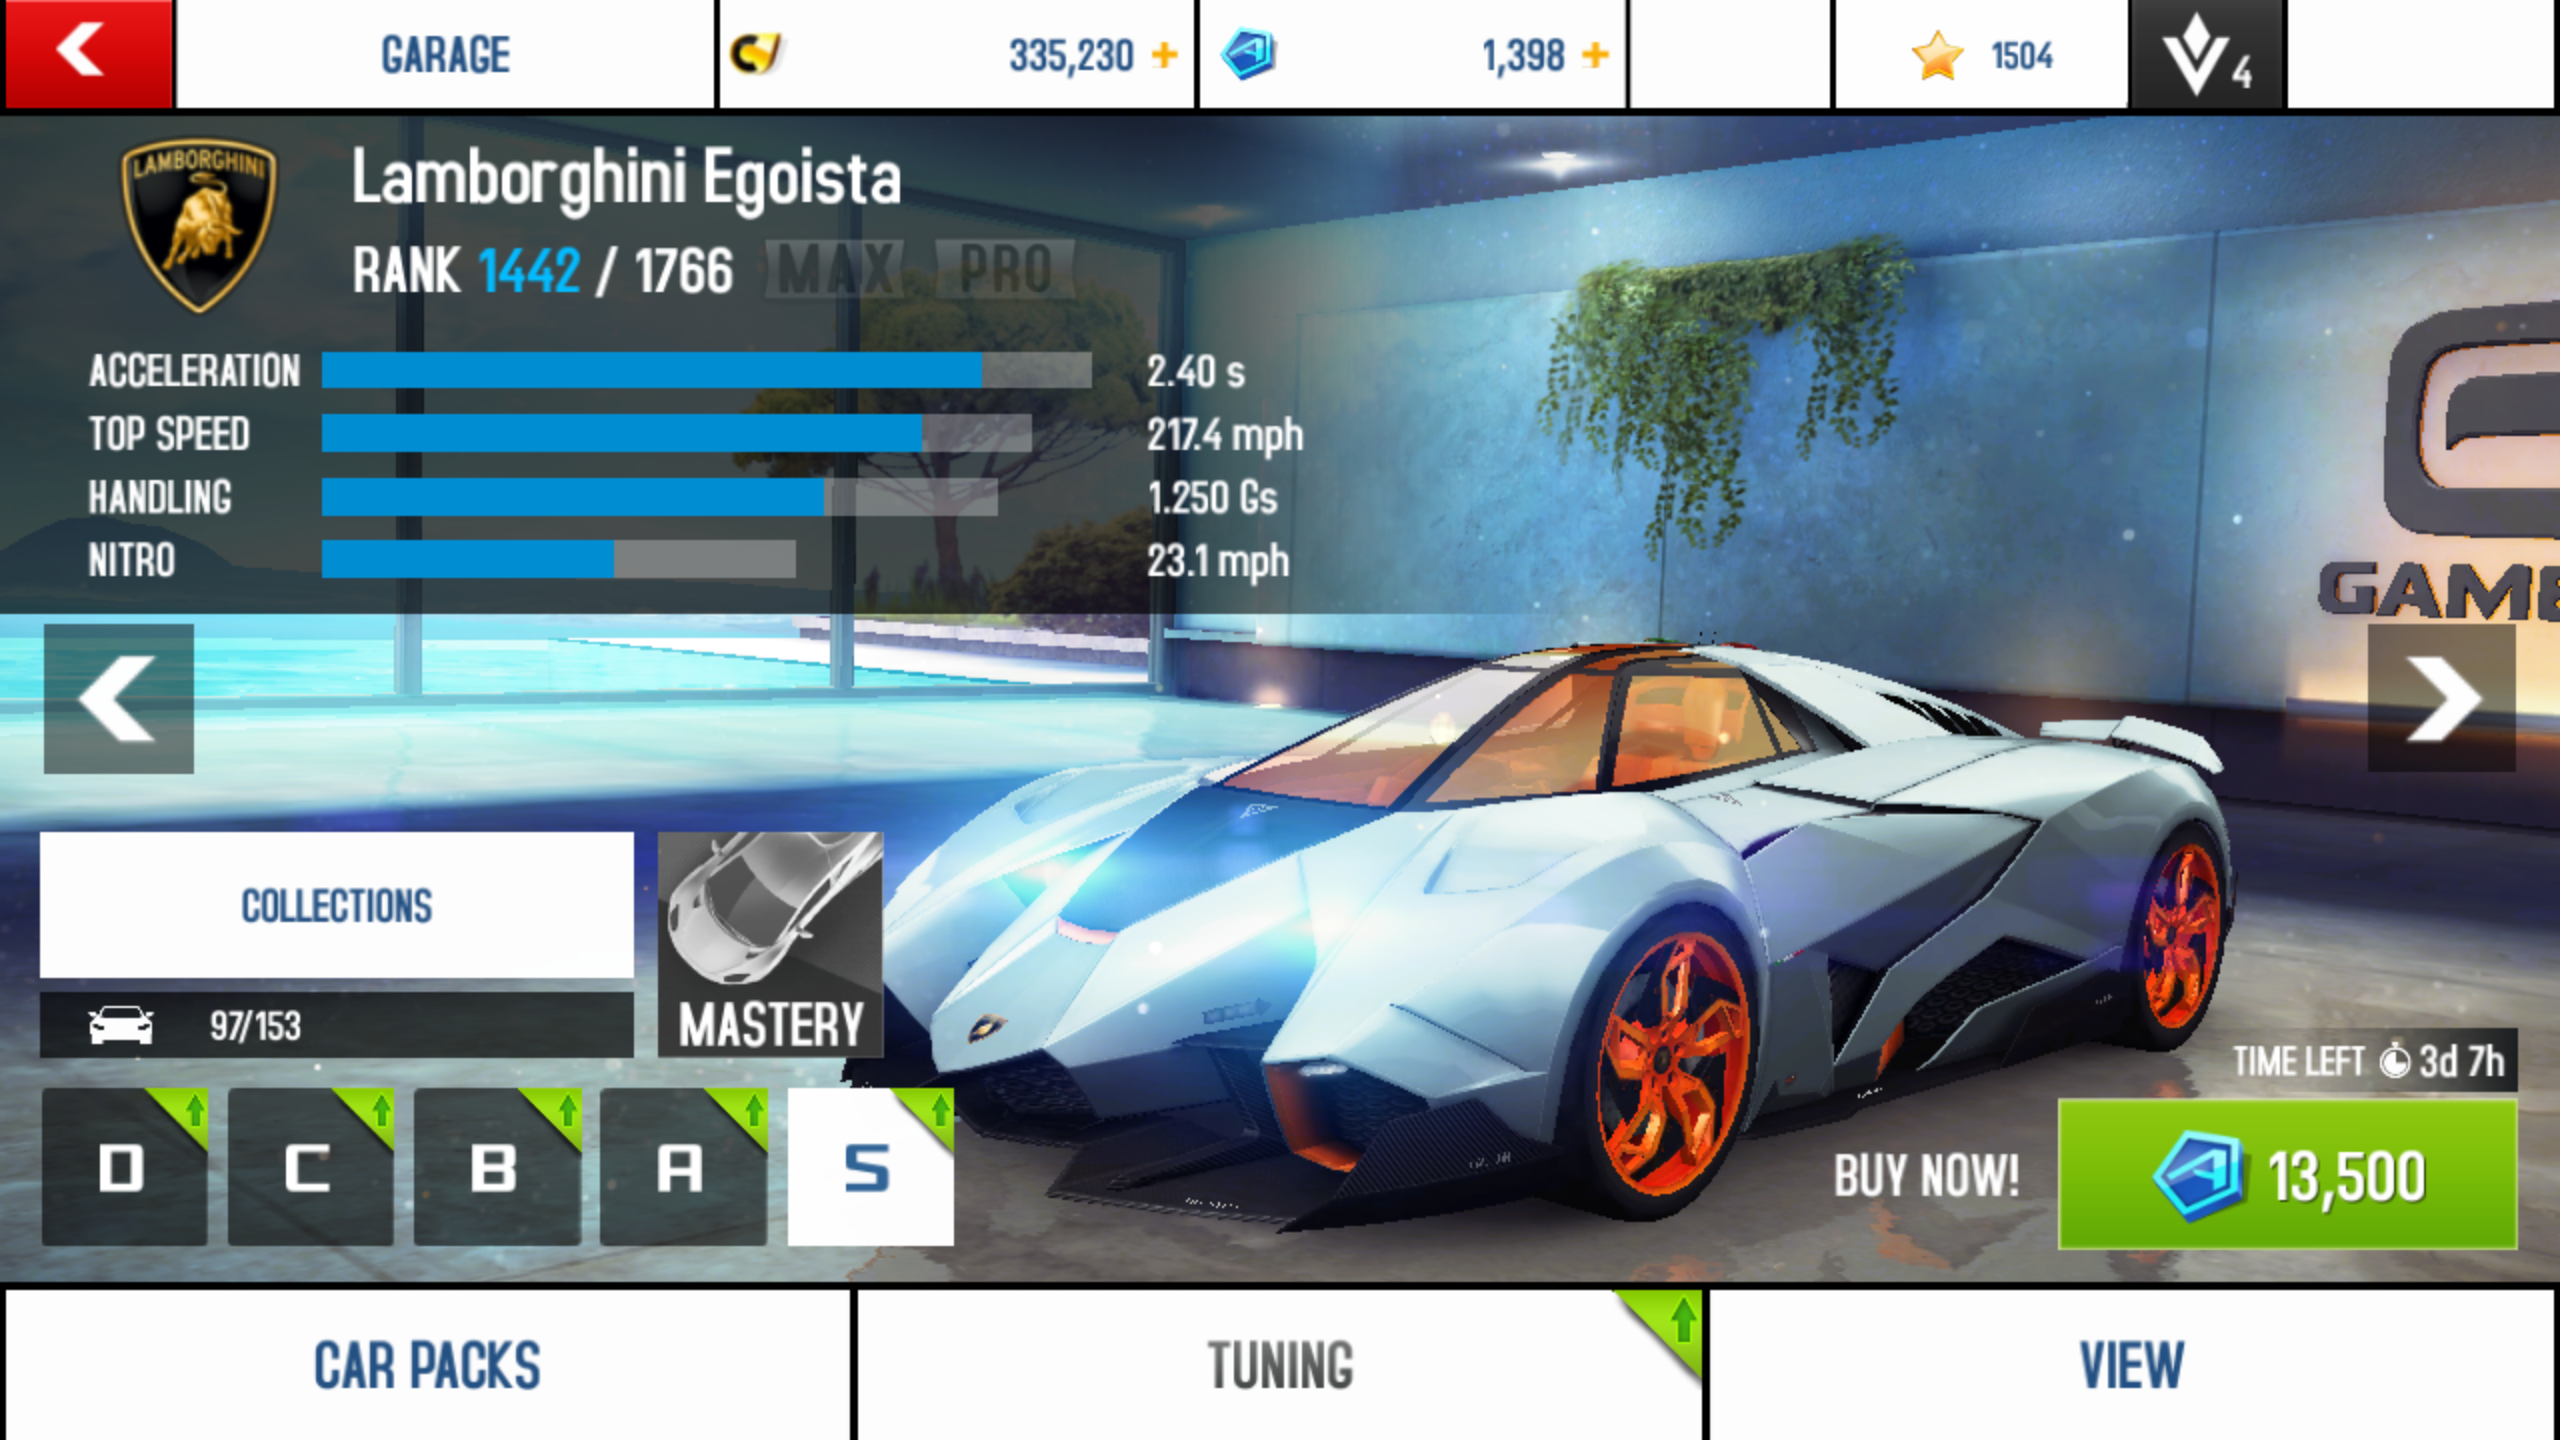 Asphalt 9 - Lamborghini Terzo Millennio (v2) - Download Free 3D